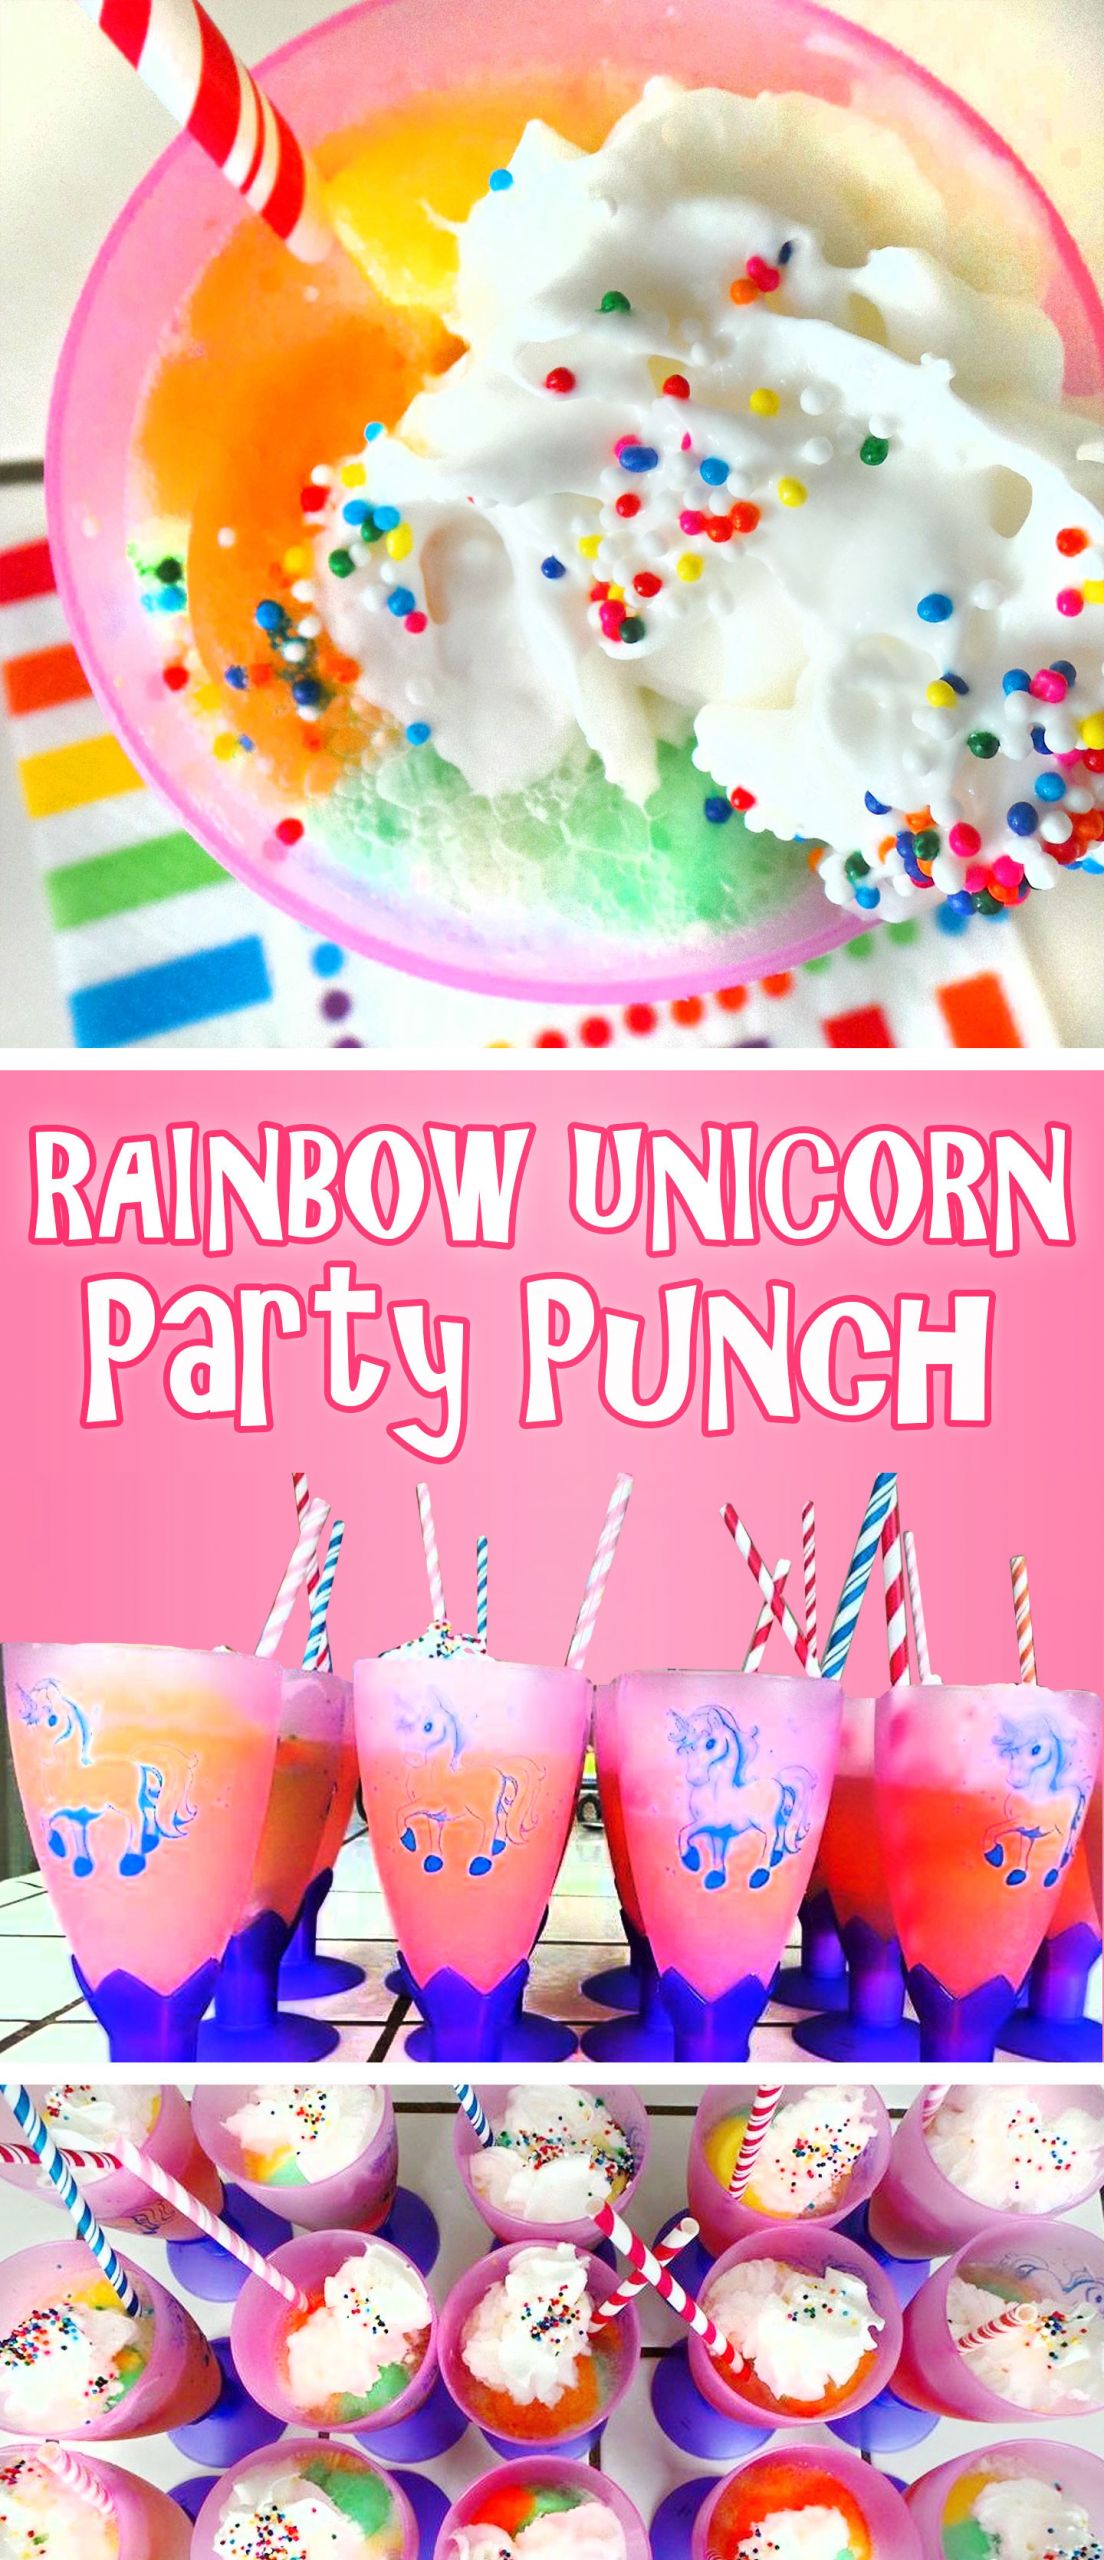 Ideas For Unicorn Party
 Rainbow Unicorn Party Punch